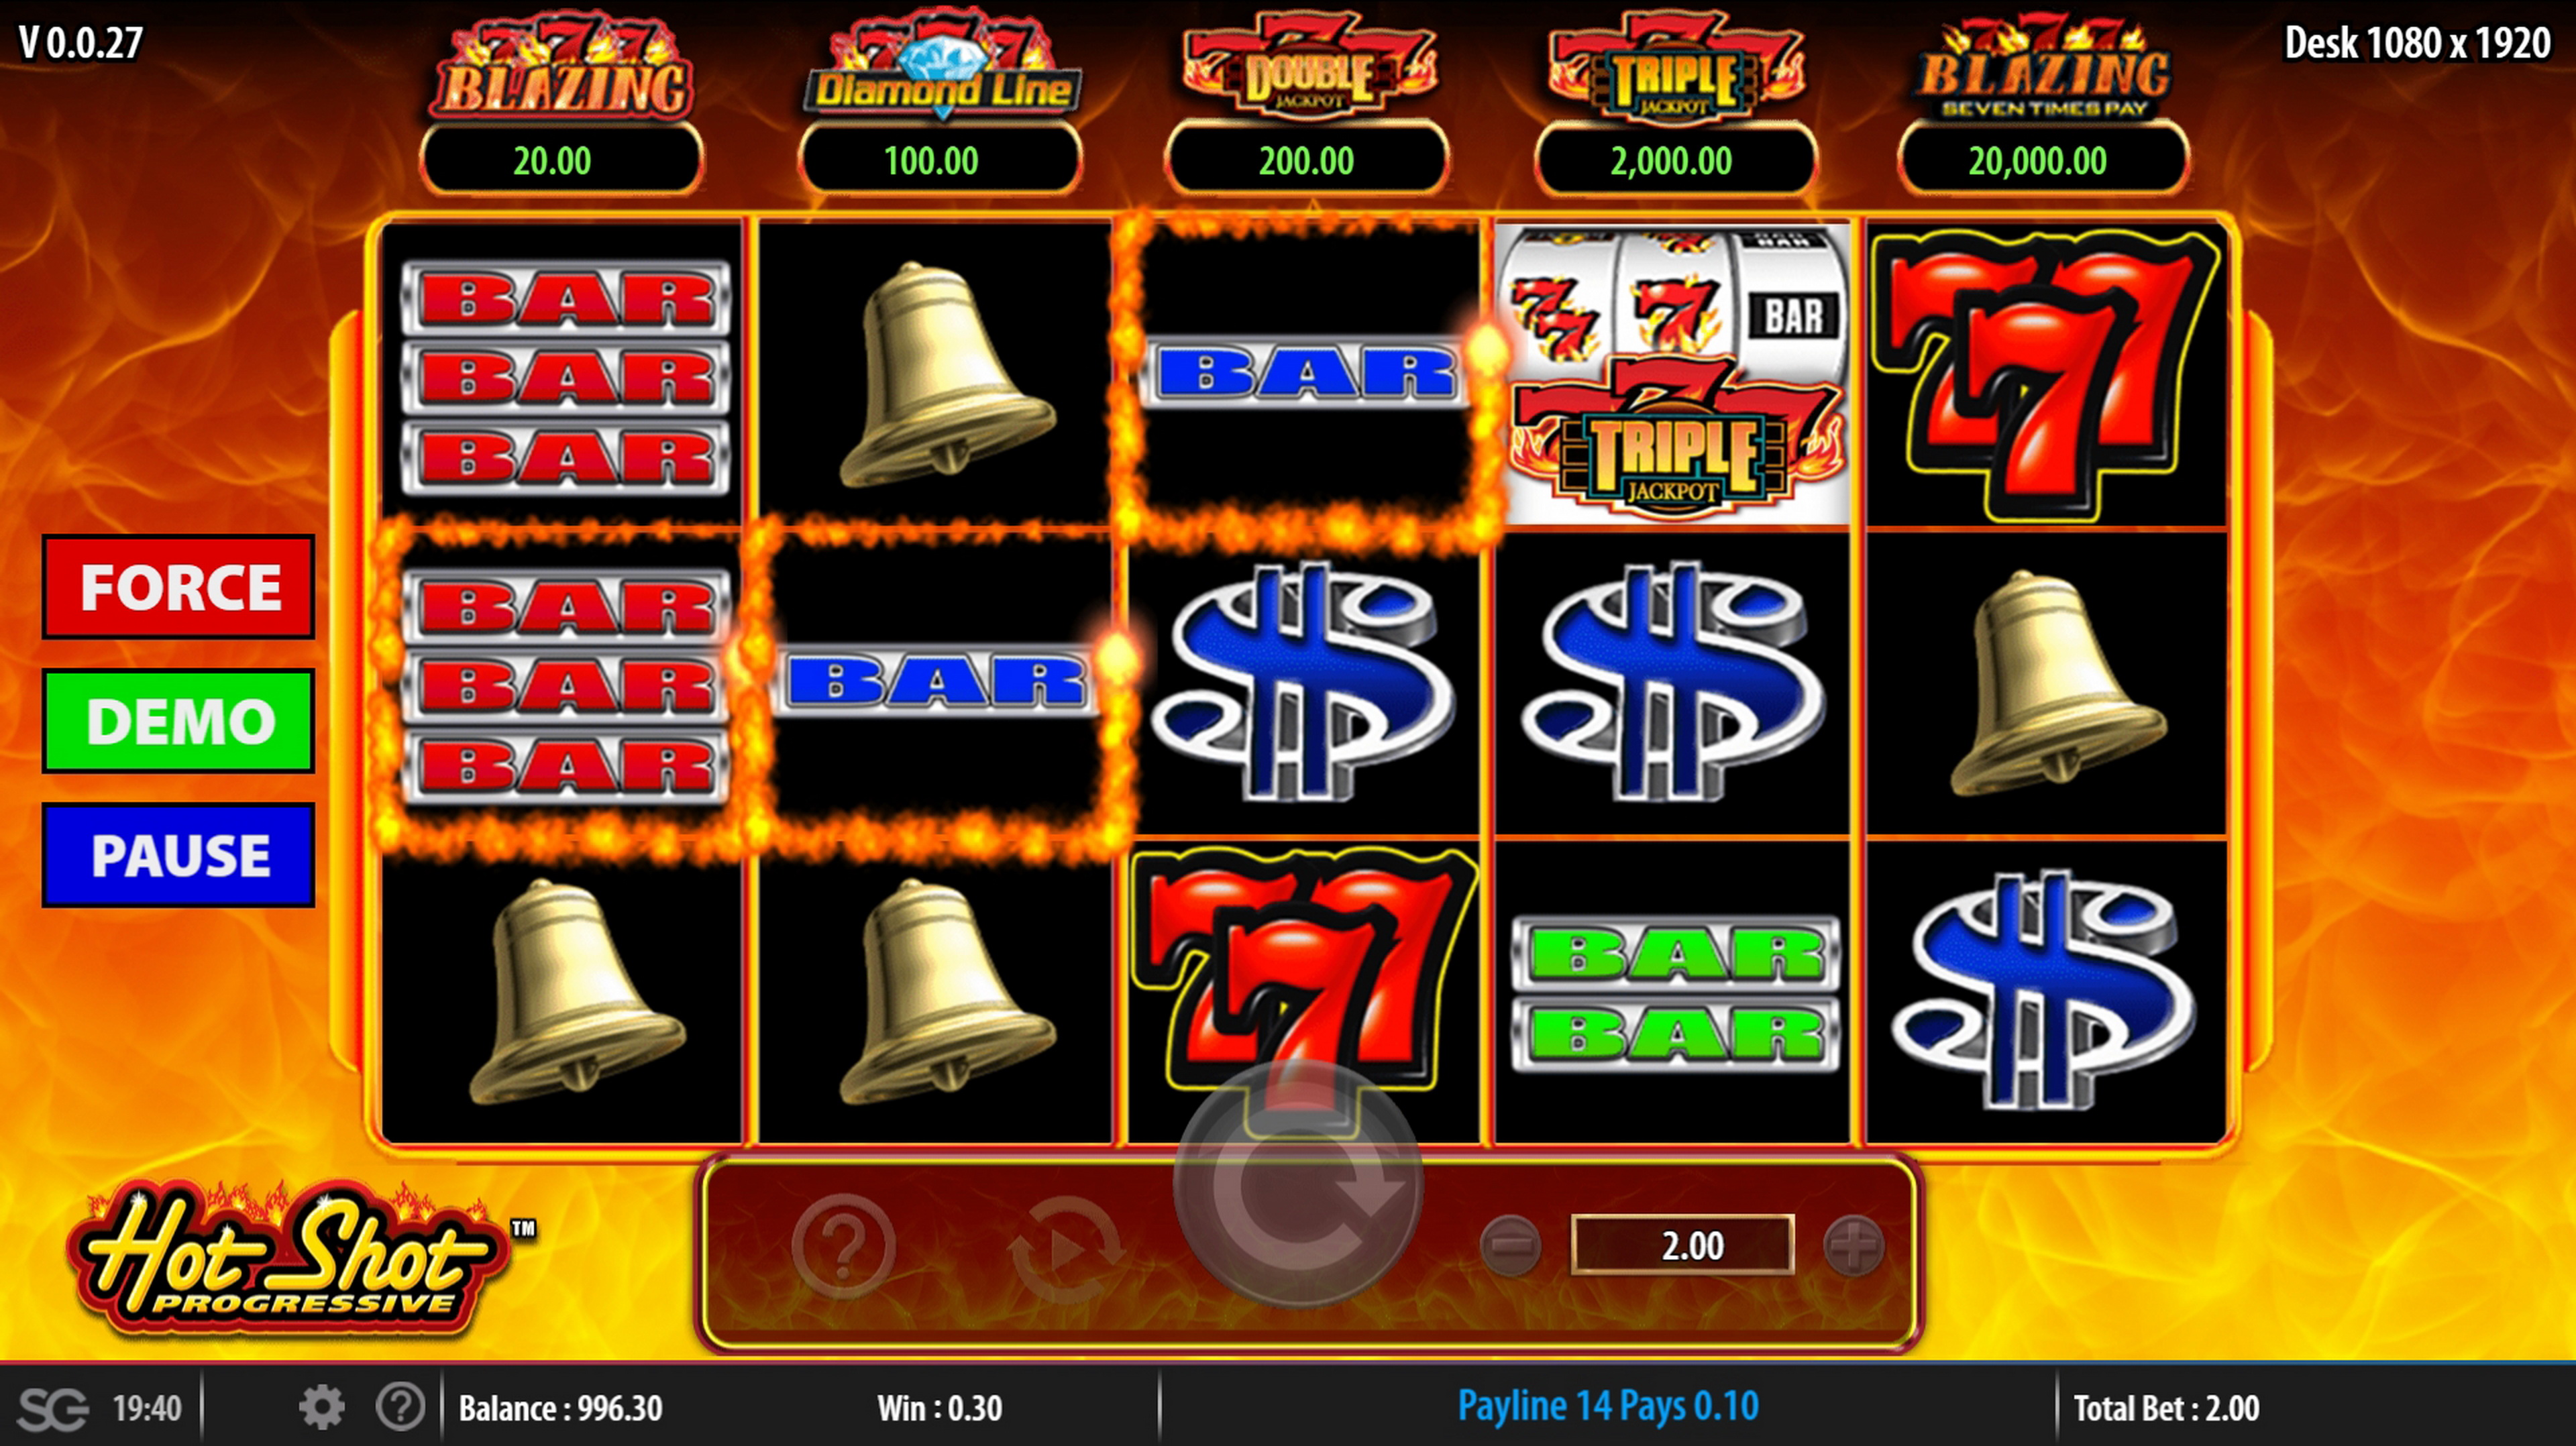 Win Money in Hot Shot Progressive Free Slot Game by Bally Technologies